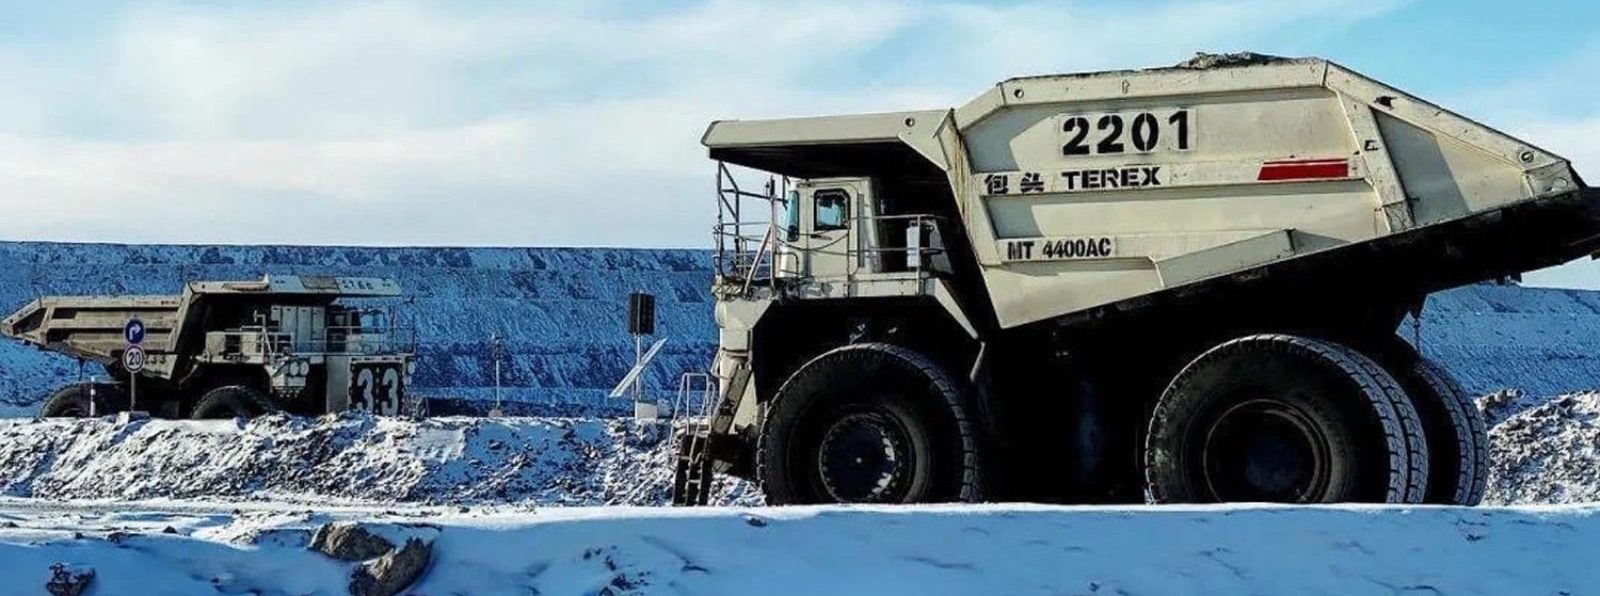 Waytous autonomous mining trucks equipped with Ouster LiDAR